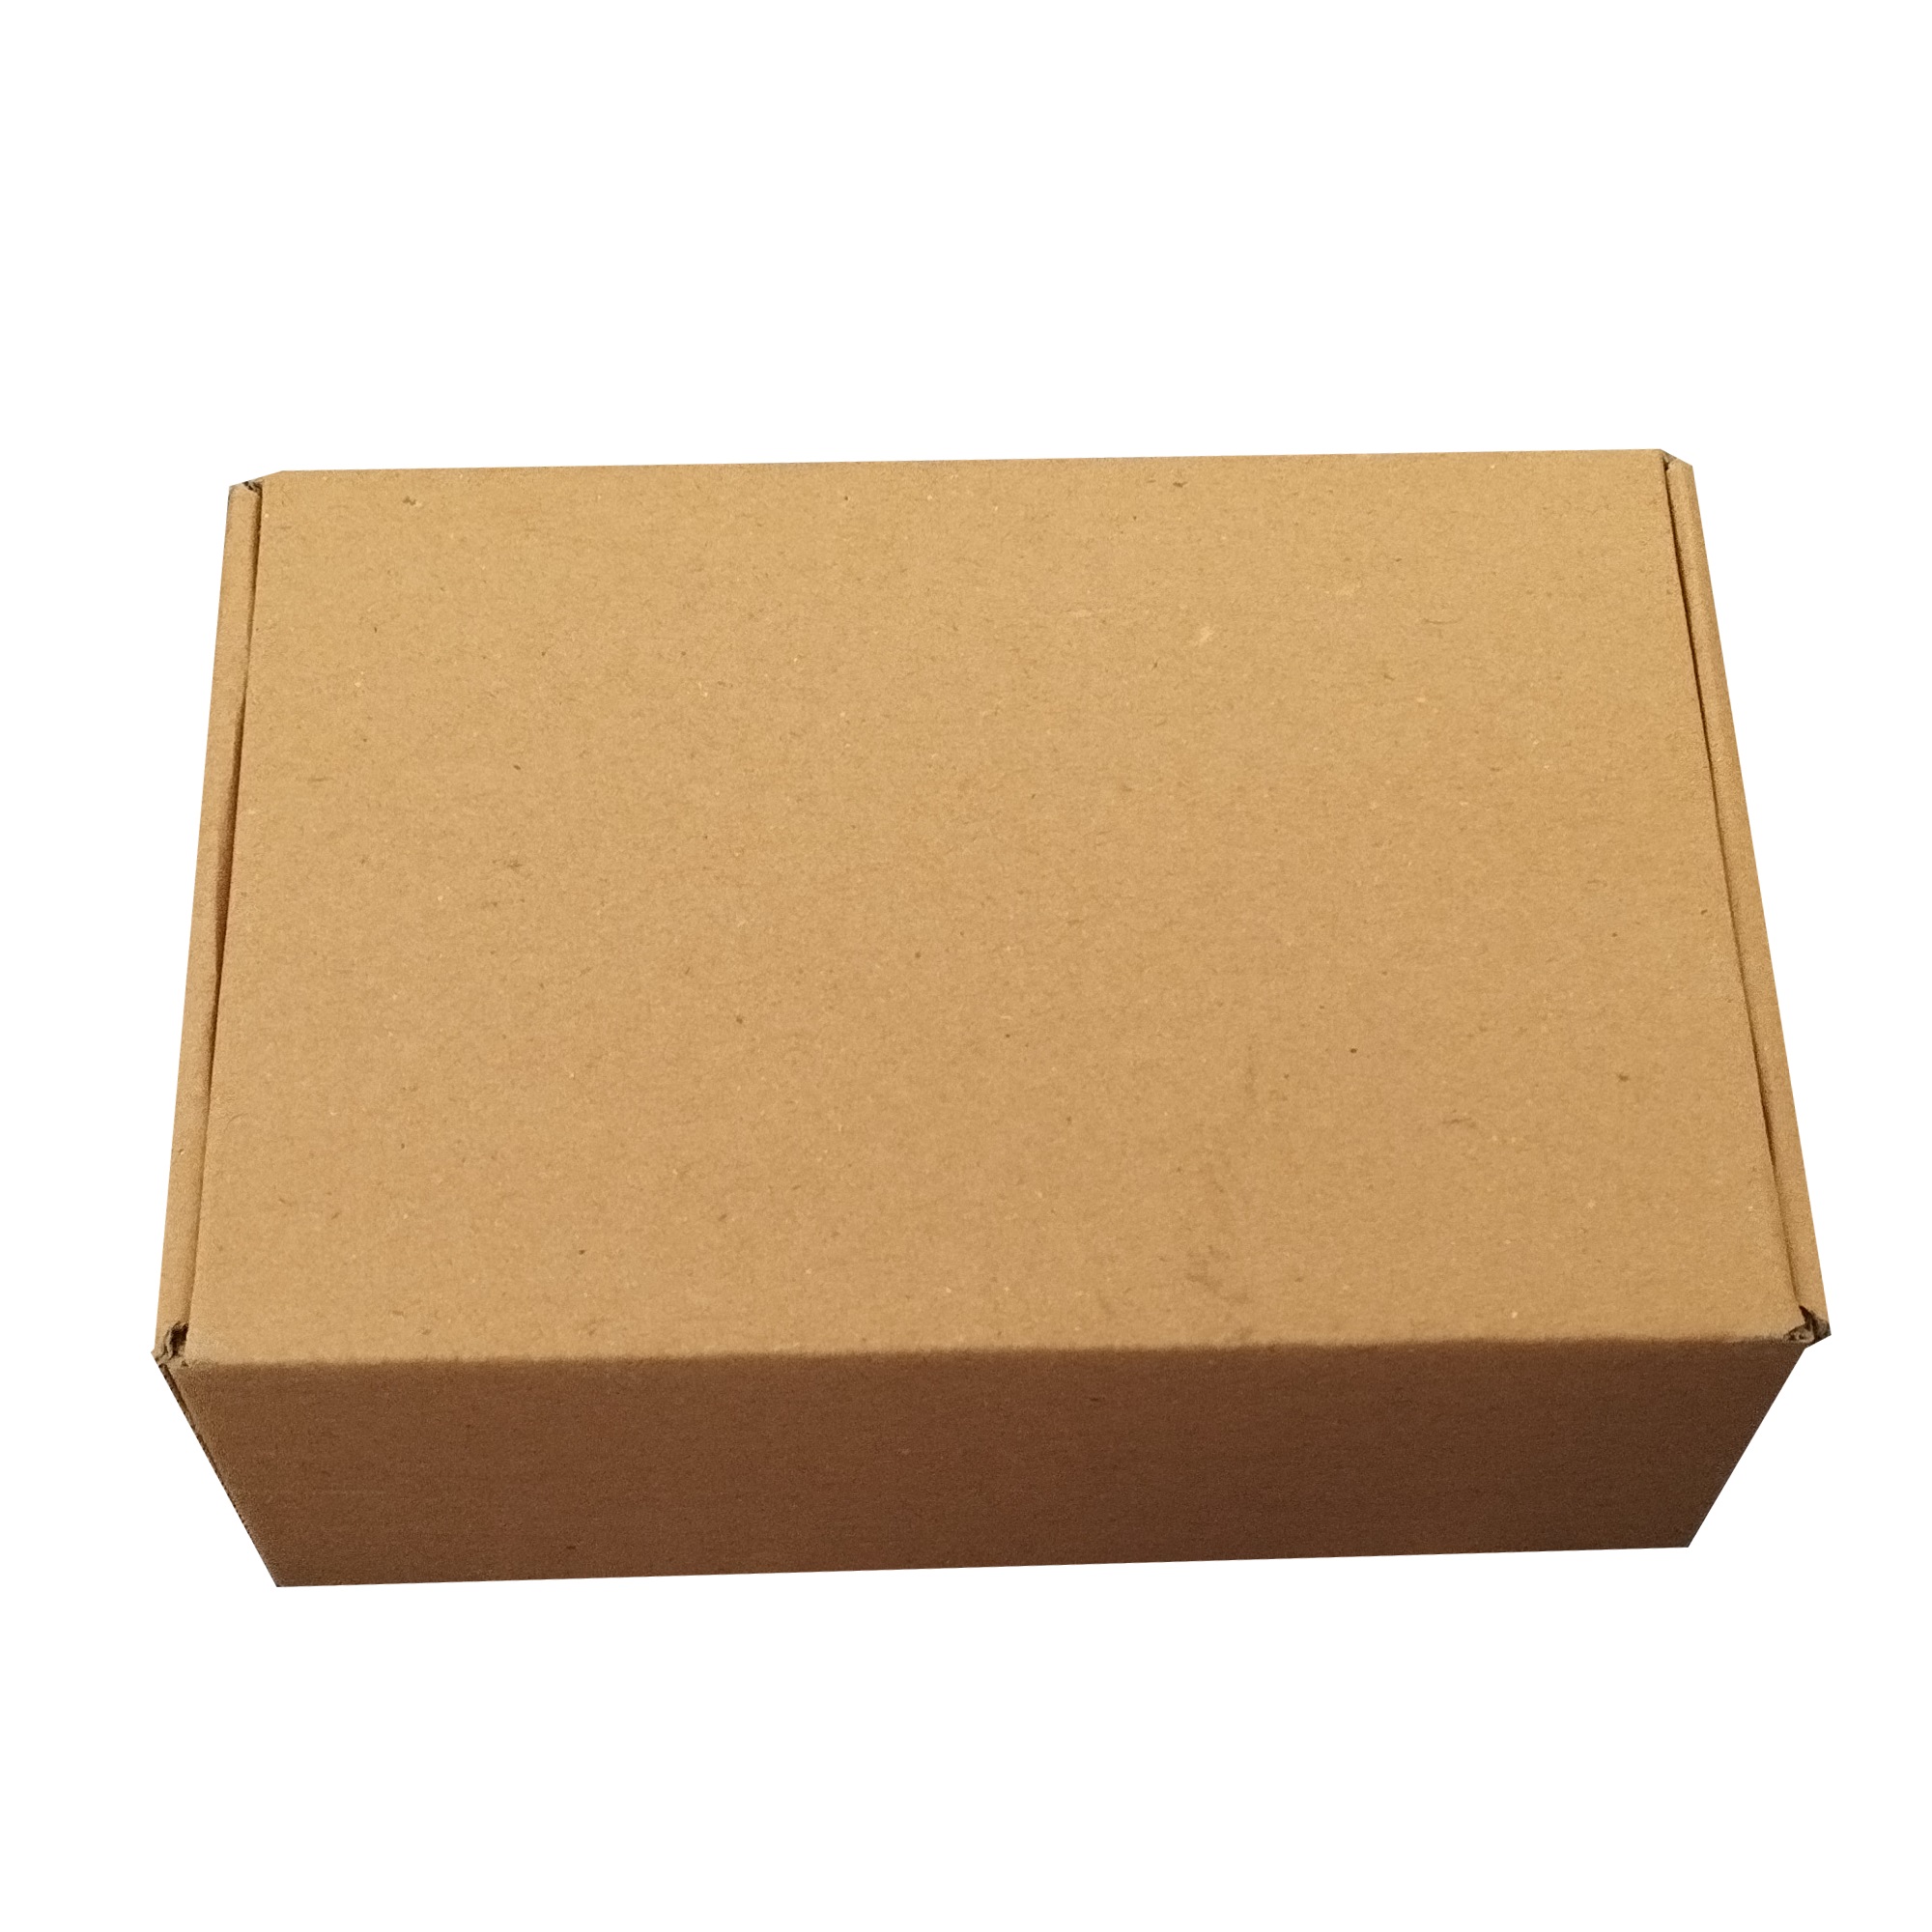 جعبه بسته بندی مدل کیبوردی k04 بسته 60 عددی